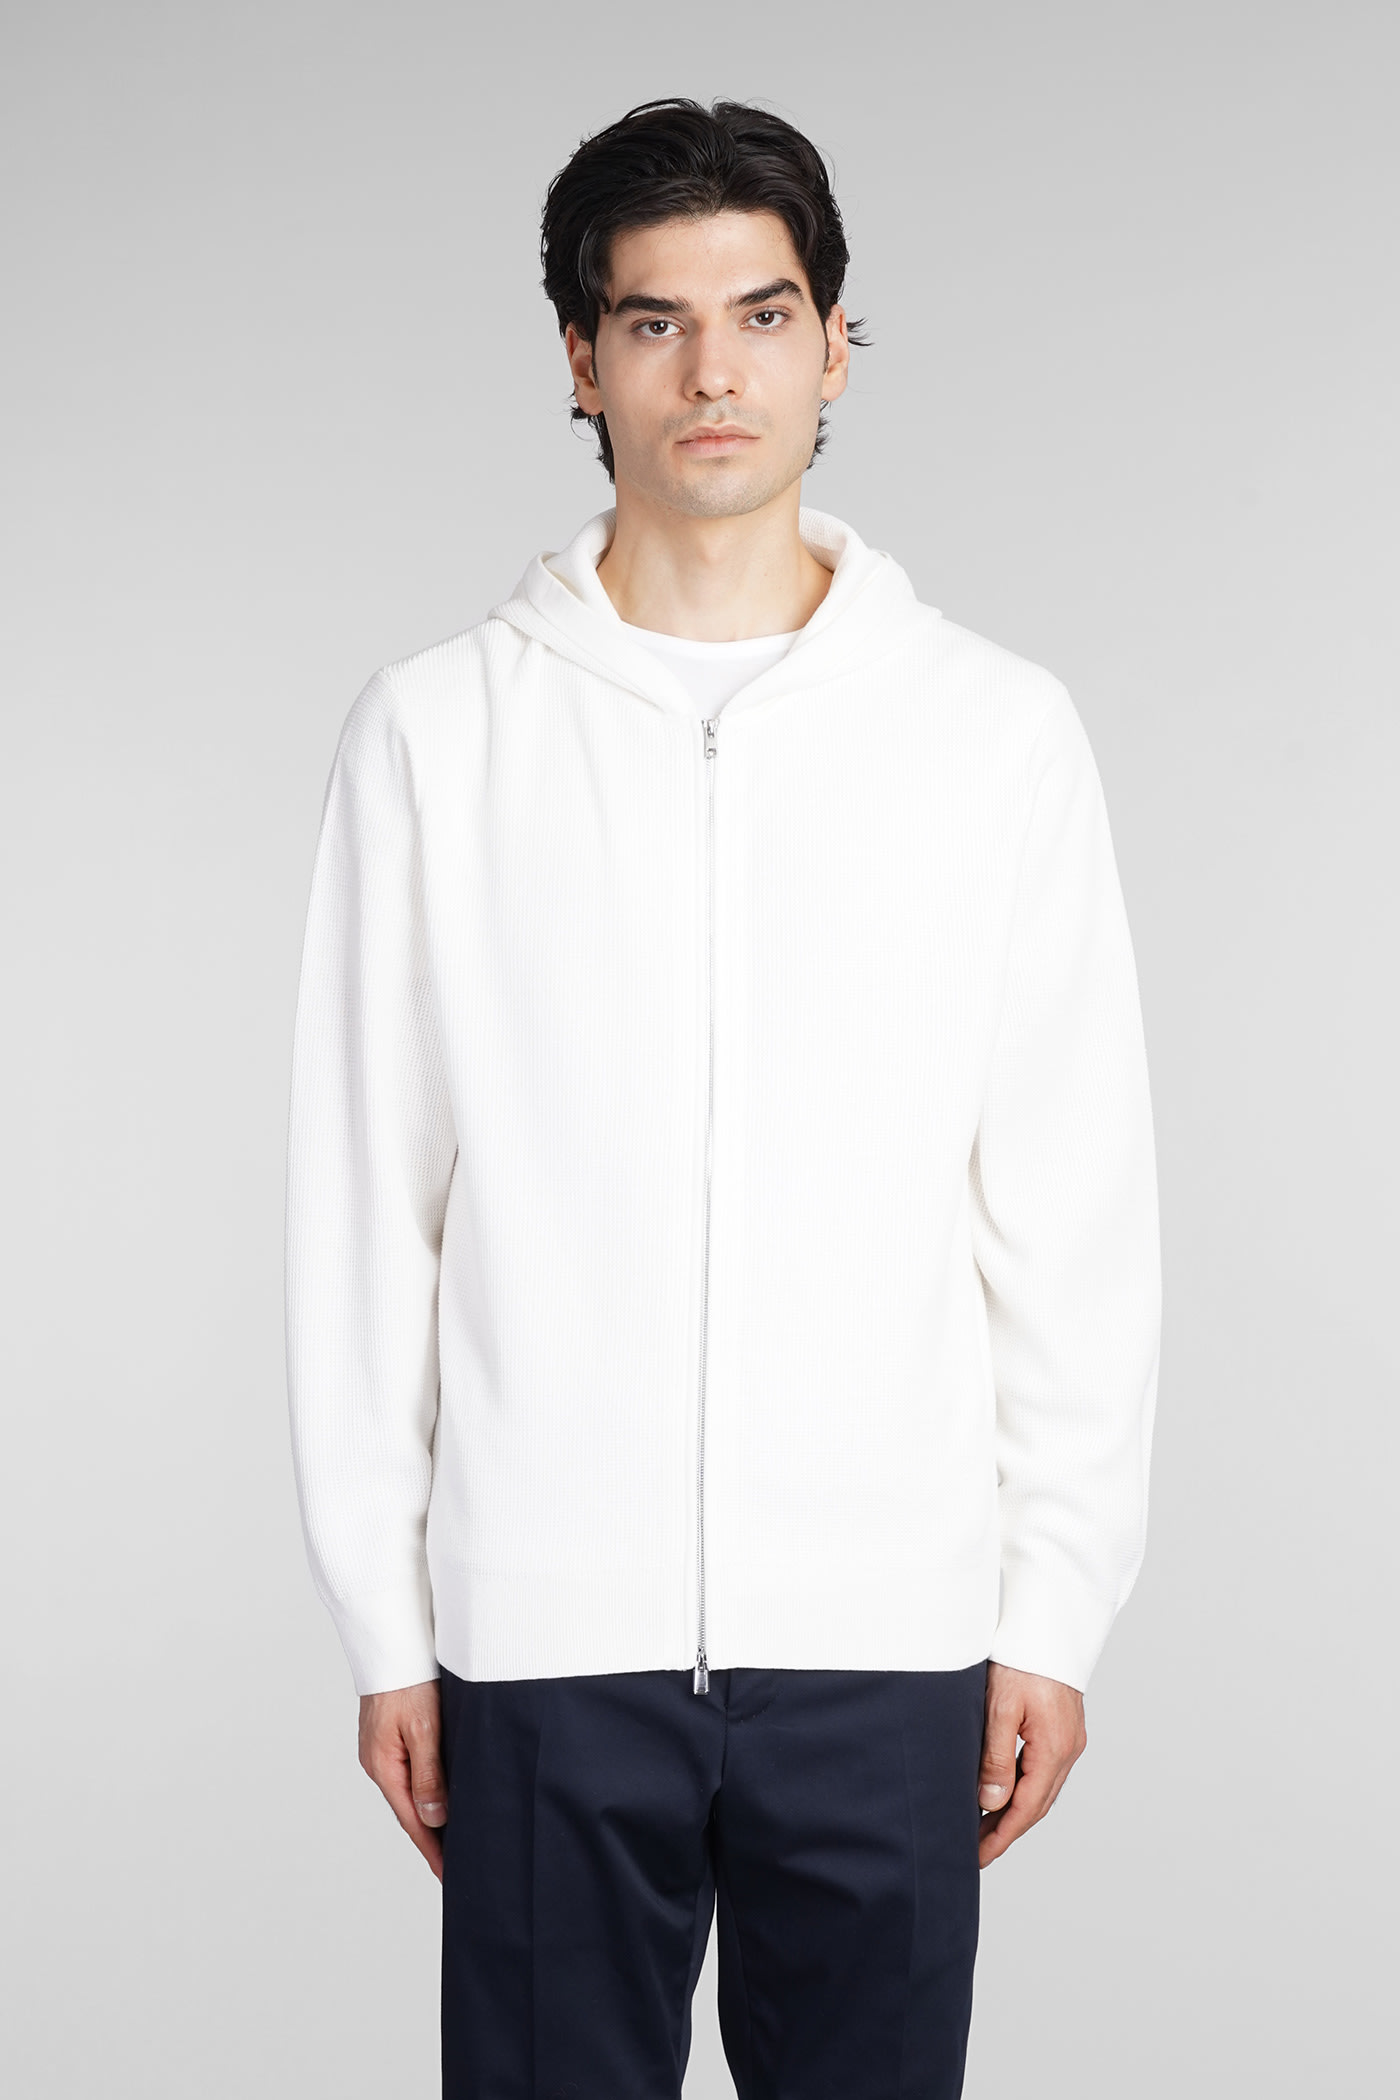 Theory Myhlo Fz Sweatshirt In White Cotton